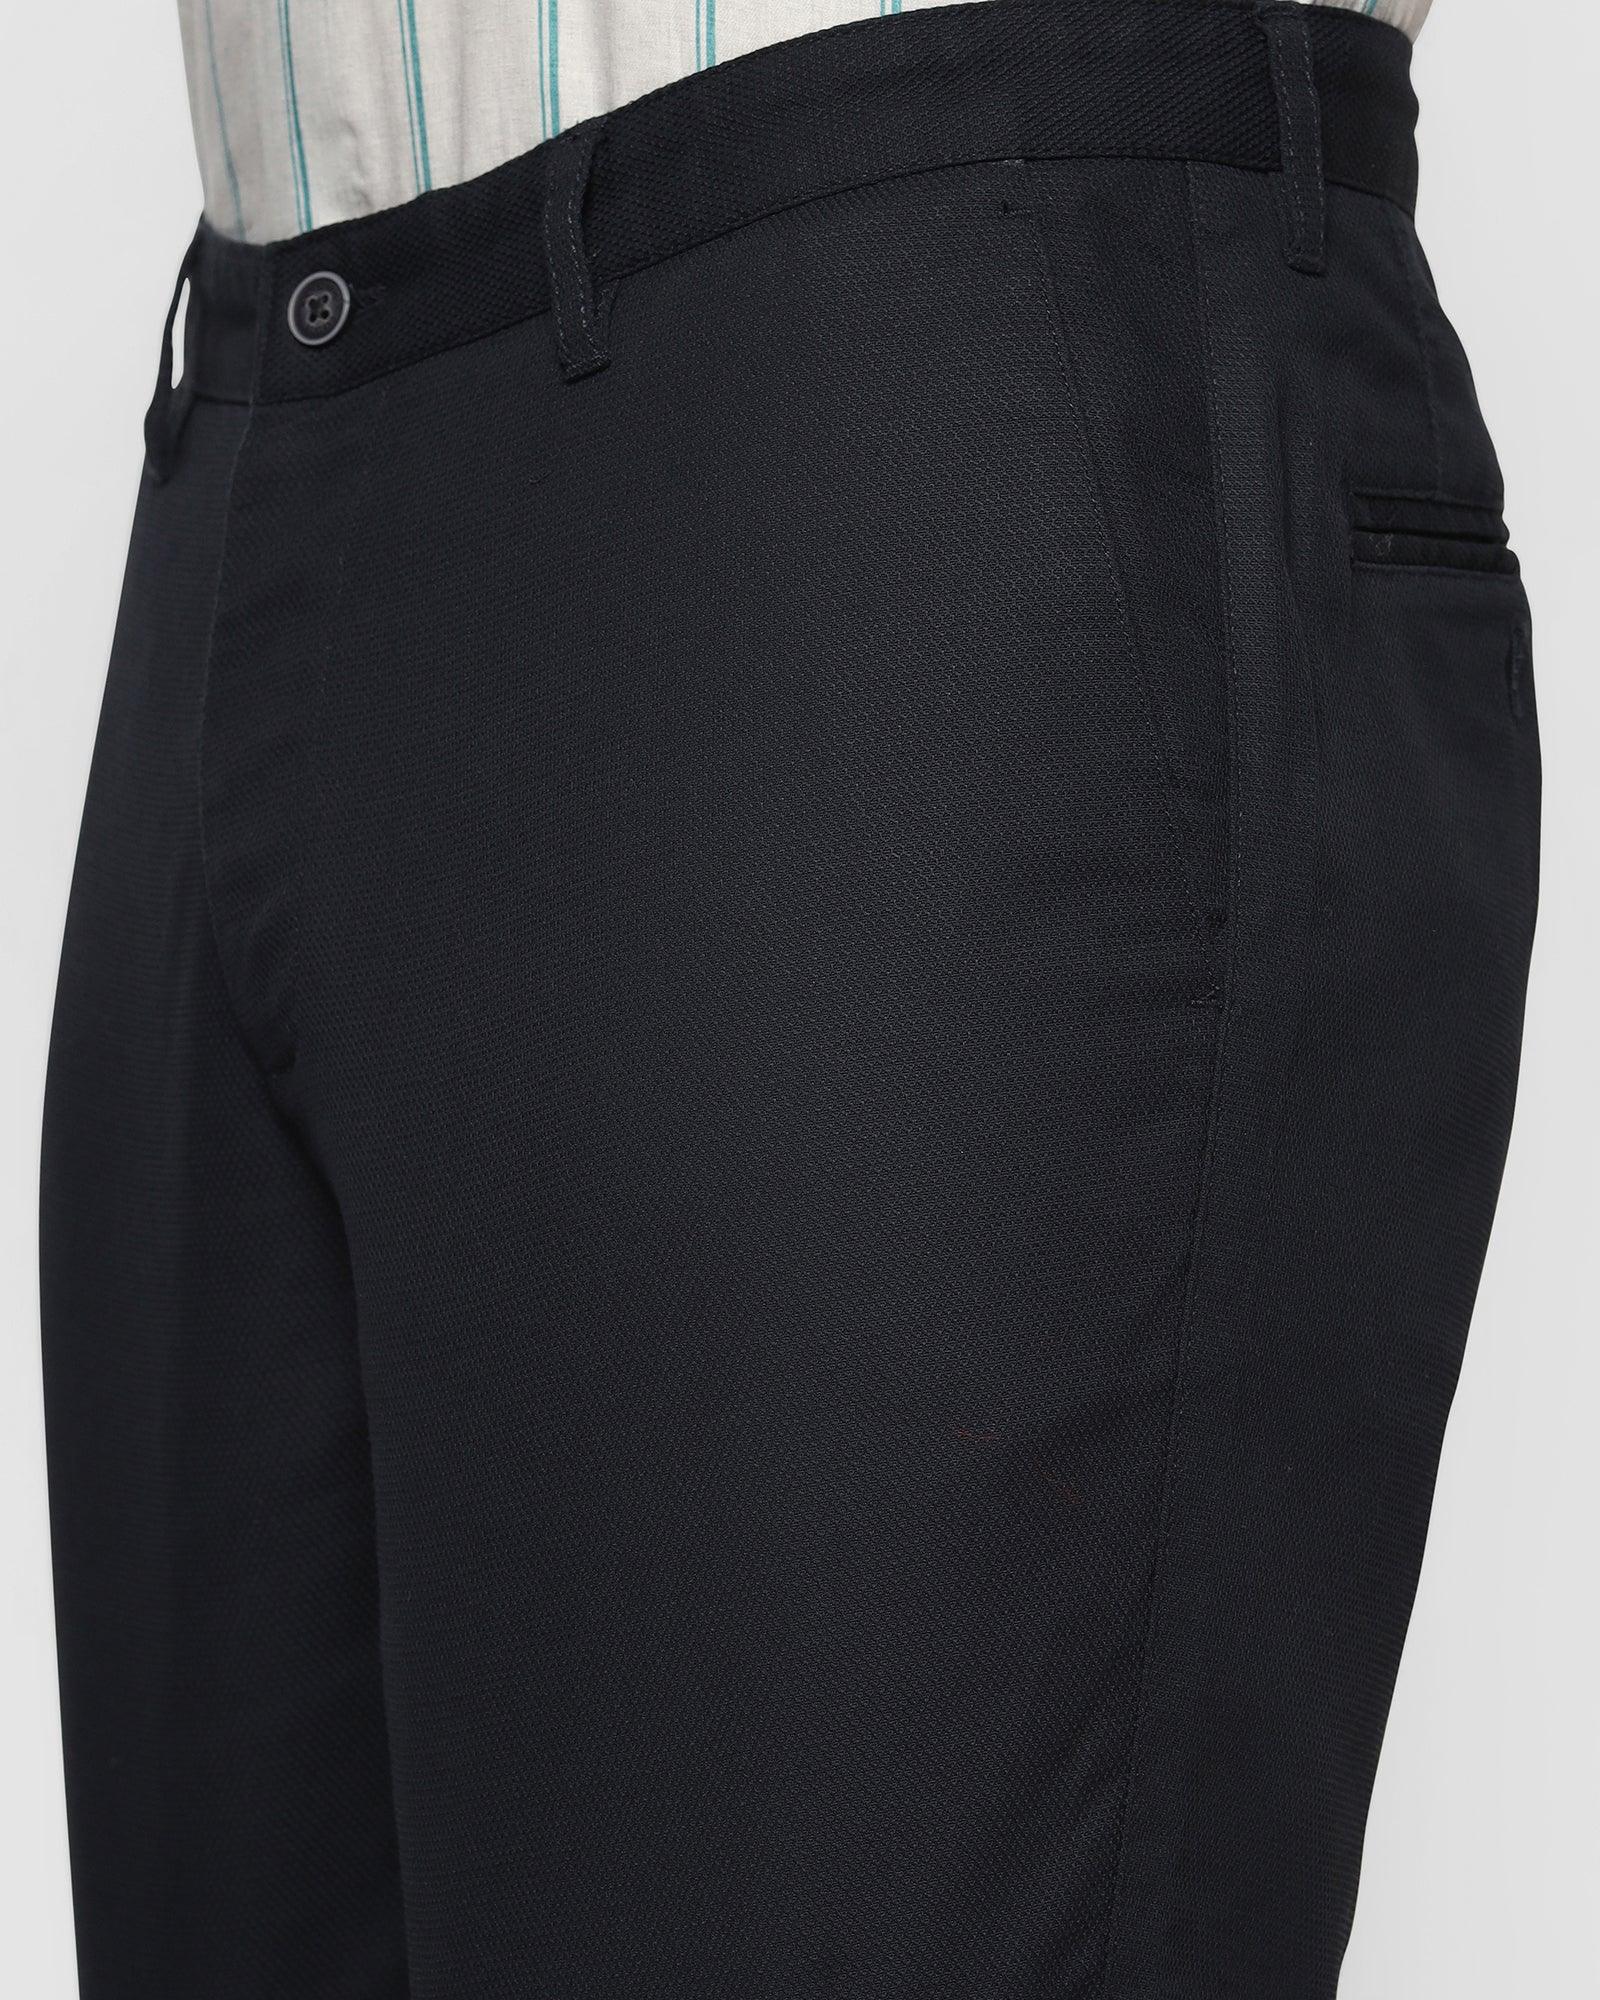 Casual Navy Textured Shorts - Depp